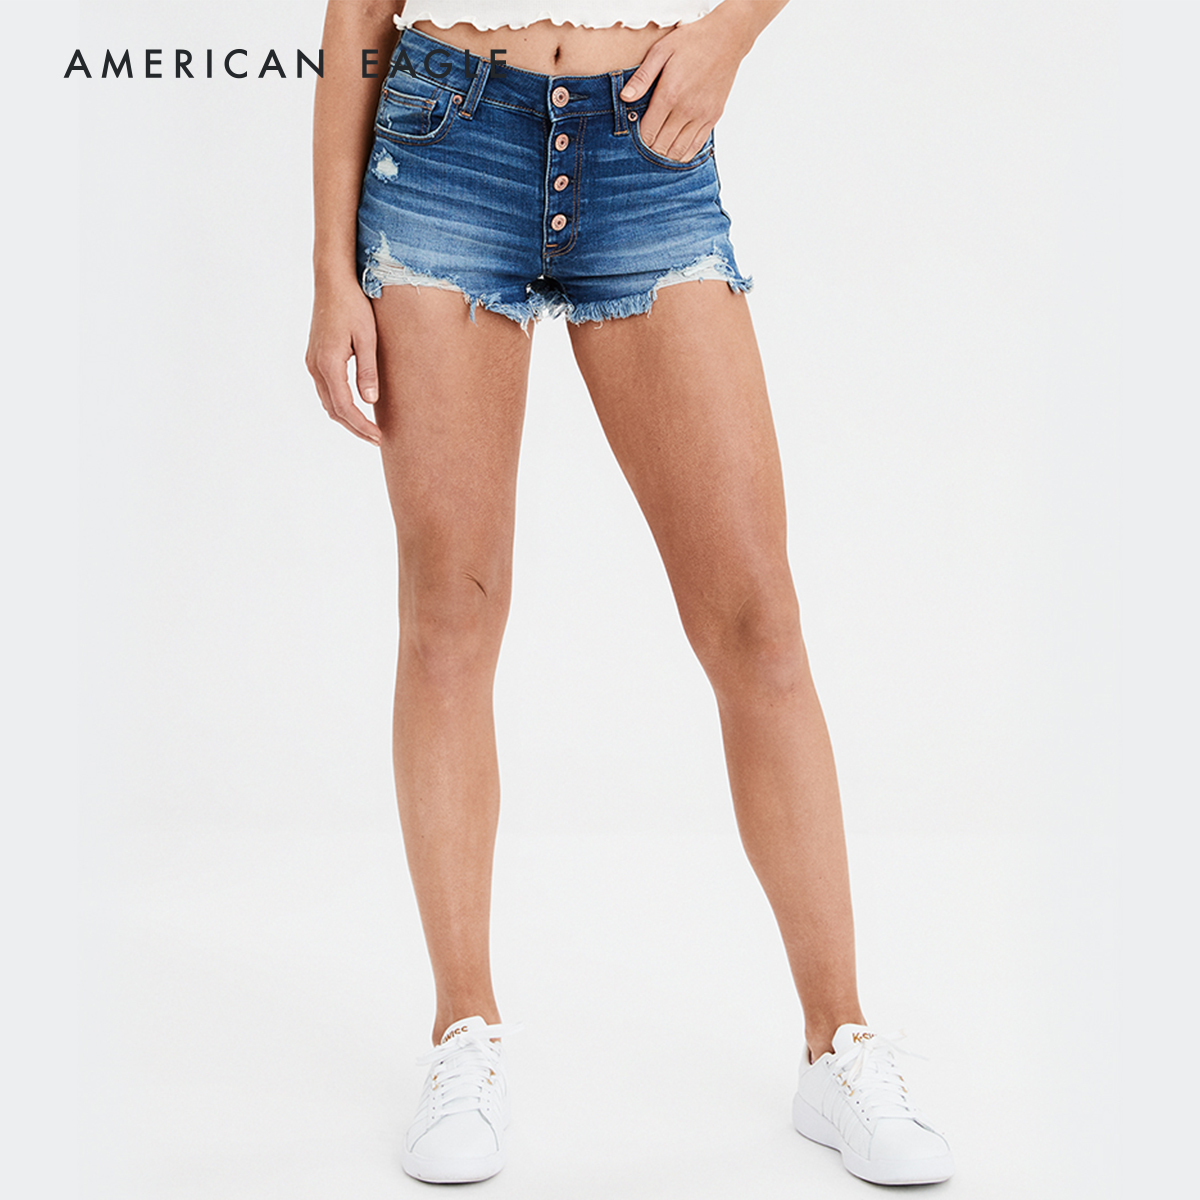 American Eagle High-Waisted Denim Short Short กางเกง ขาสั้น ผู้หญิง ยีนส์ เอวสูง ( WSS 033-5440-929) สี EASY BREEZY BLUE สี EASY BREEZY BLUE